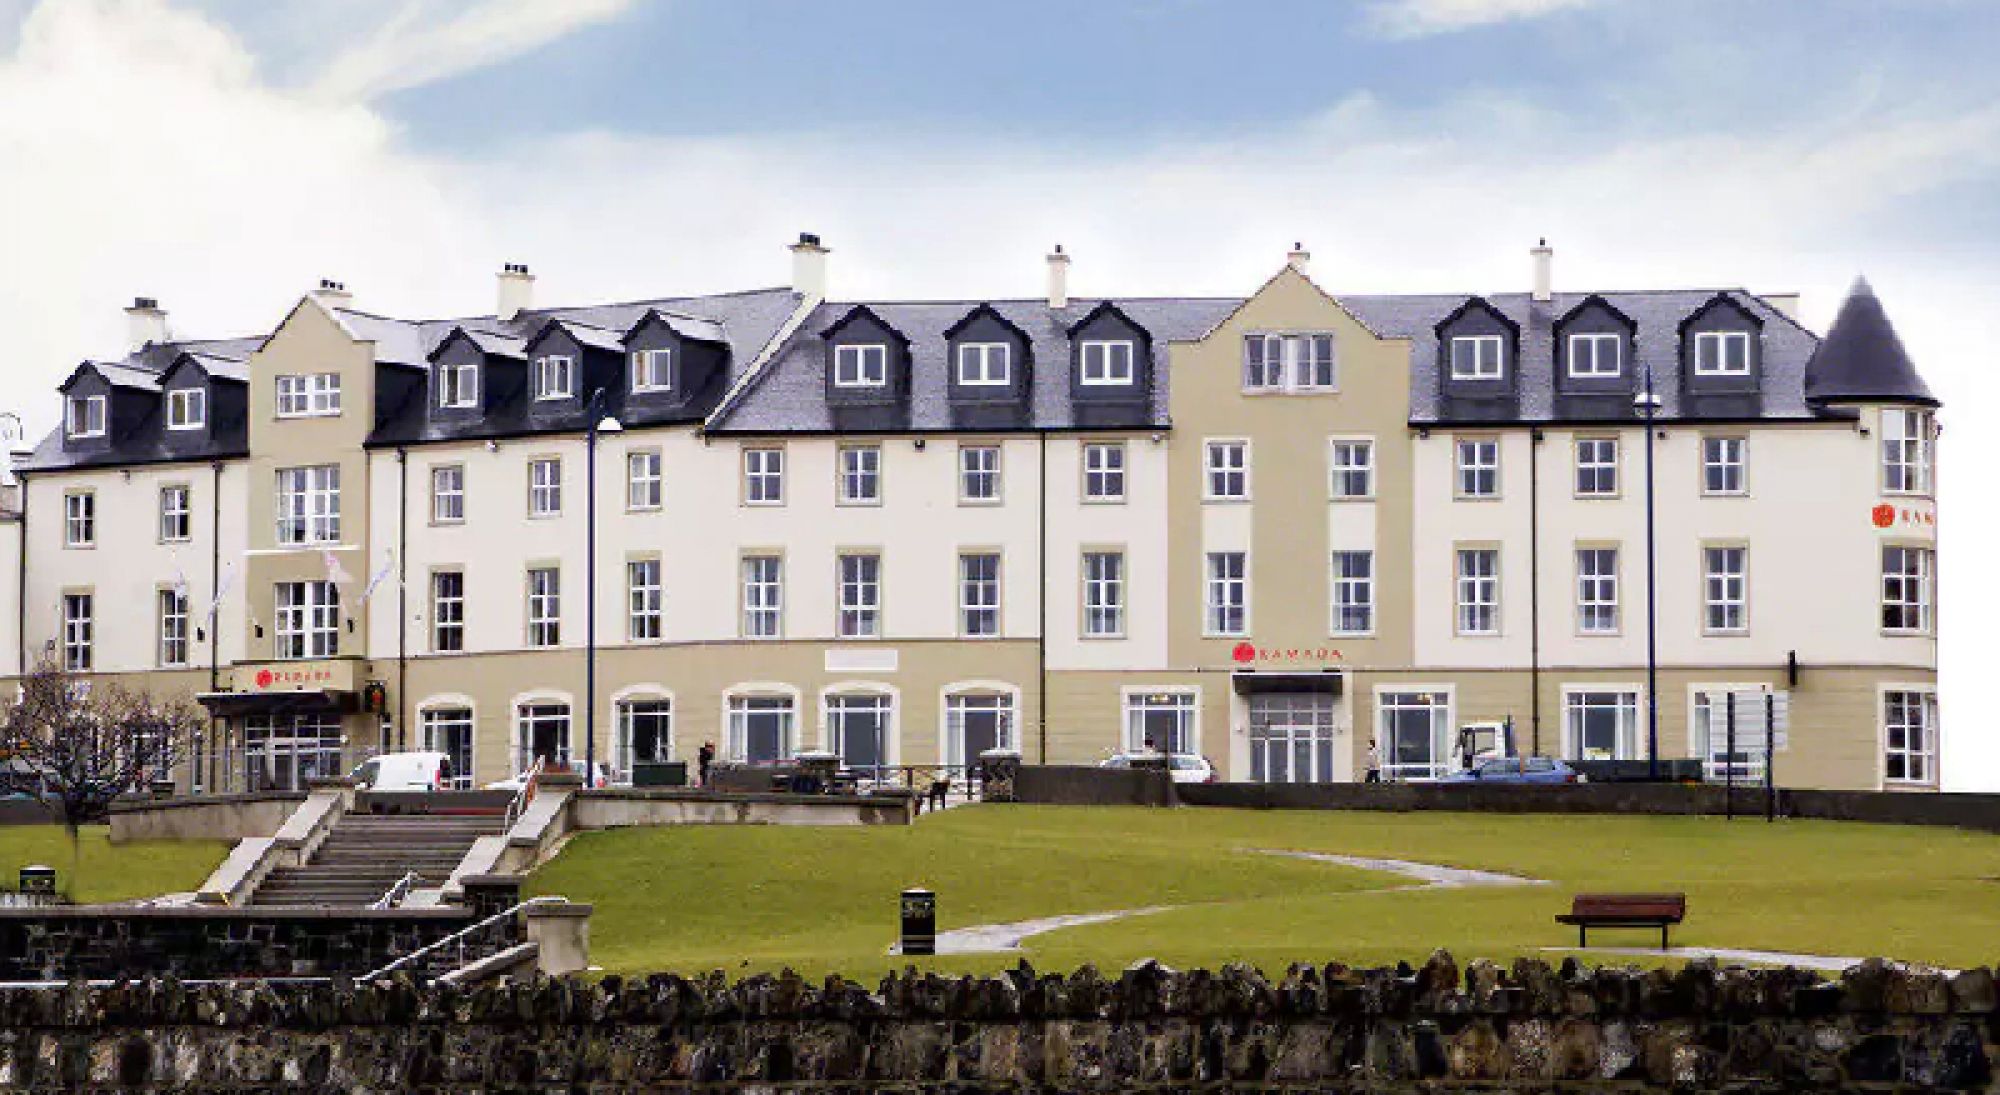 View Portrush Atlantic Hotel's lovely hotel in amazing Northern Ireland.